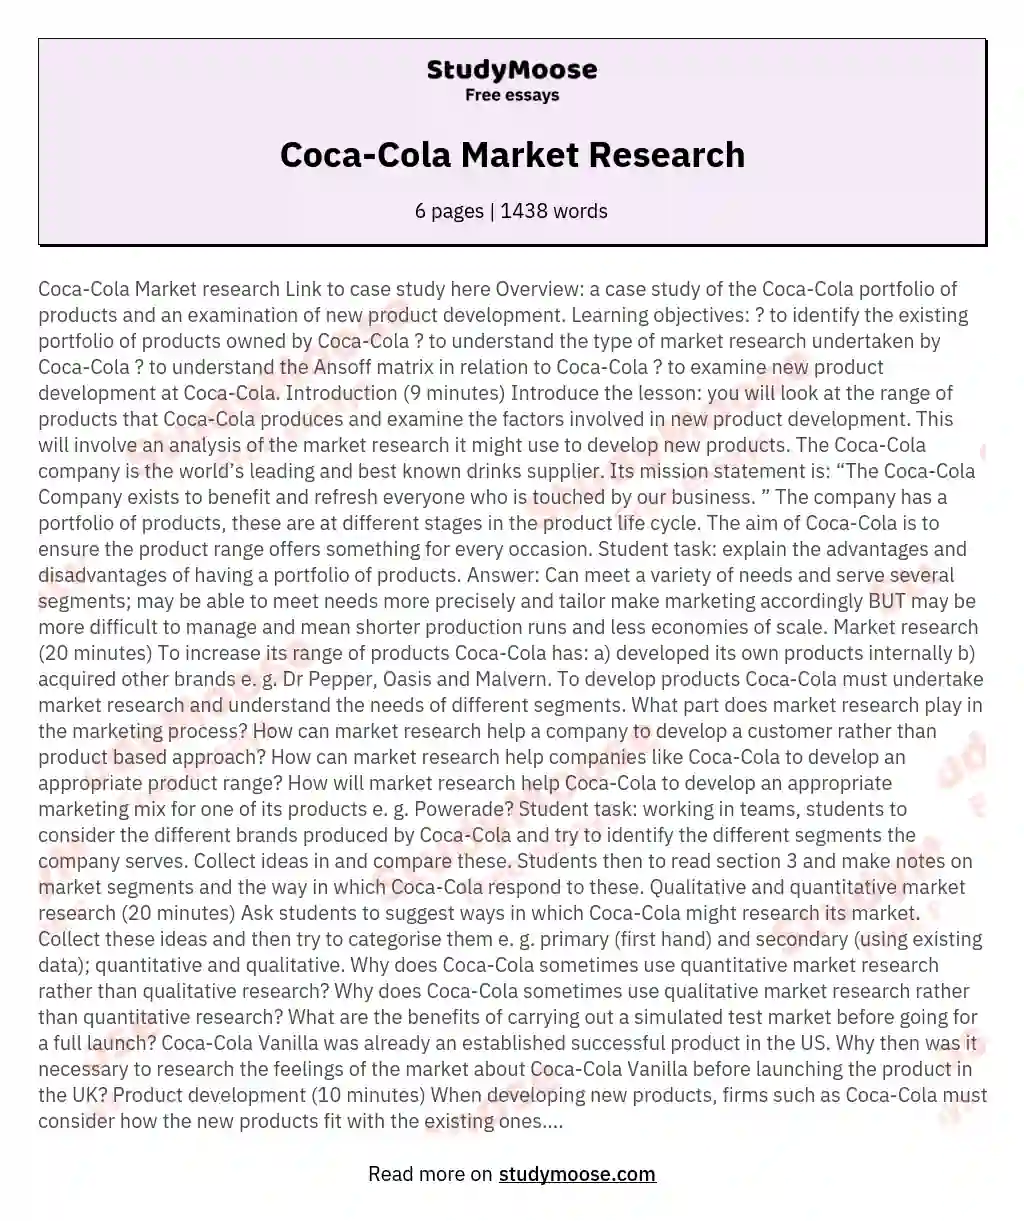 Coca-Cola Market Research essay